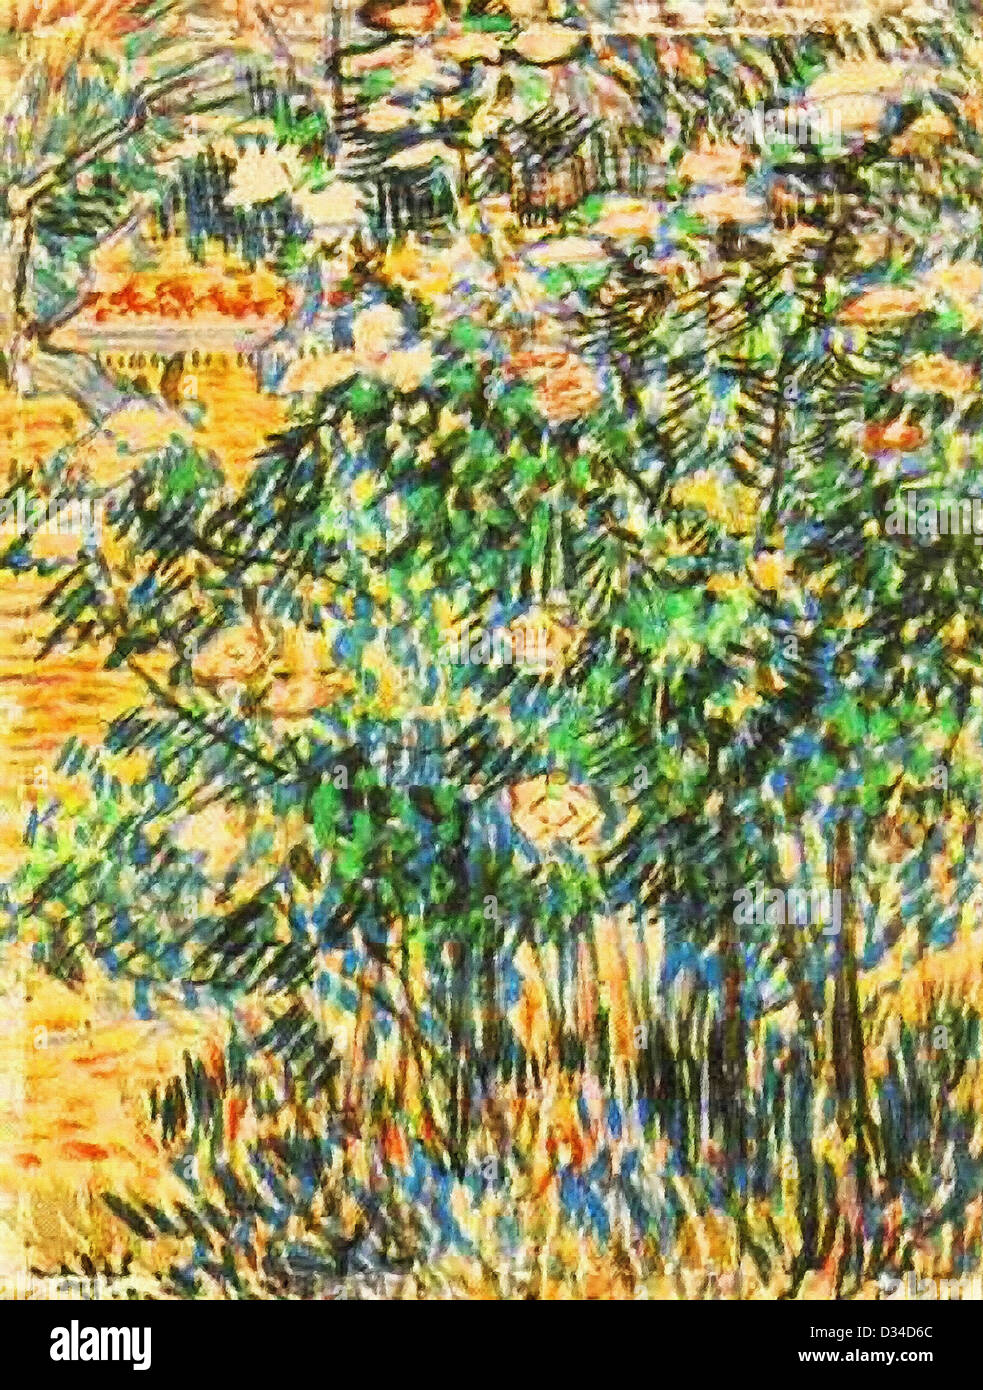 Vincent van Gogh, Flowering Shrubs. 1889. Post-Impressionism. Oil on canvas. Rijksmuseum Kröller-Müller, Otterlo, Netherlands. Stock Photo